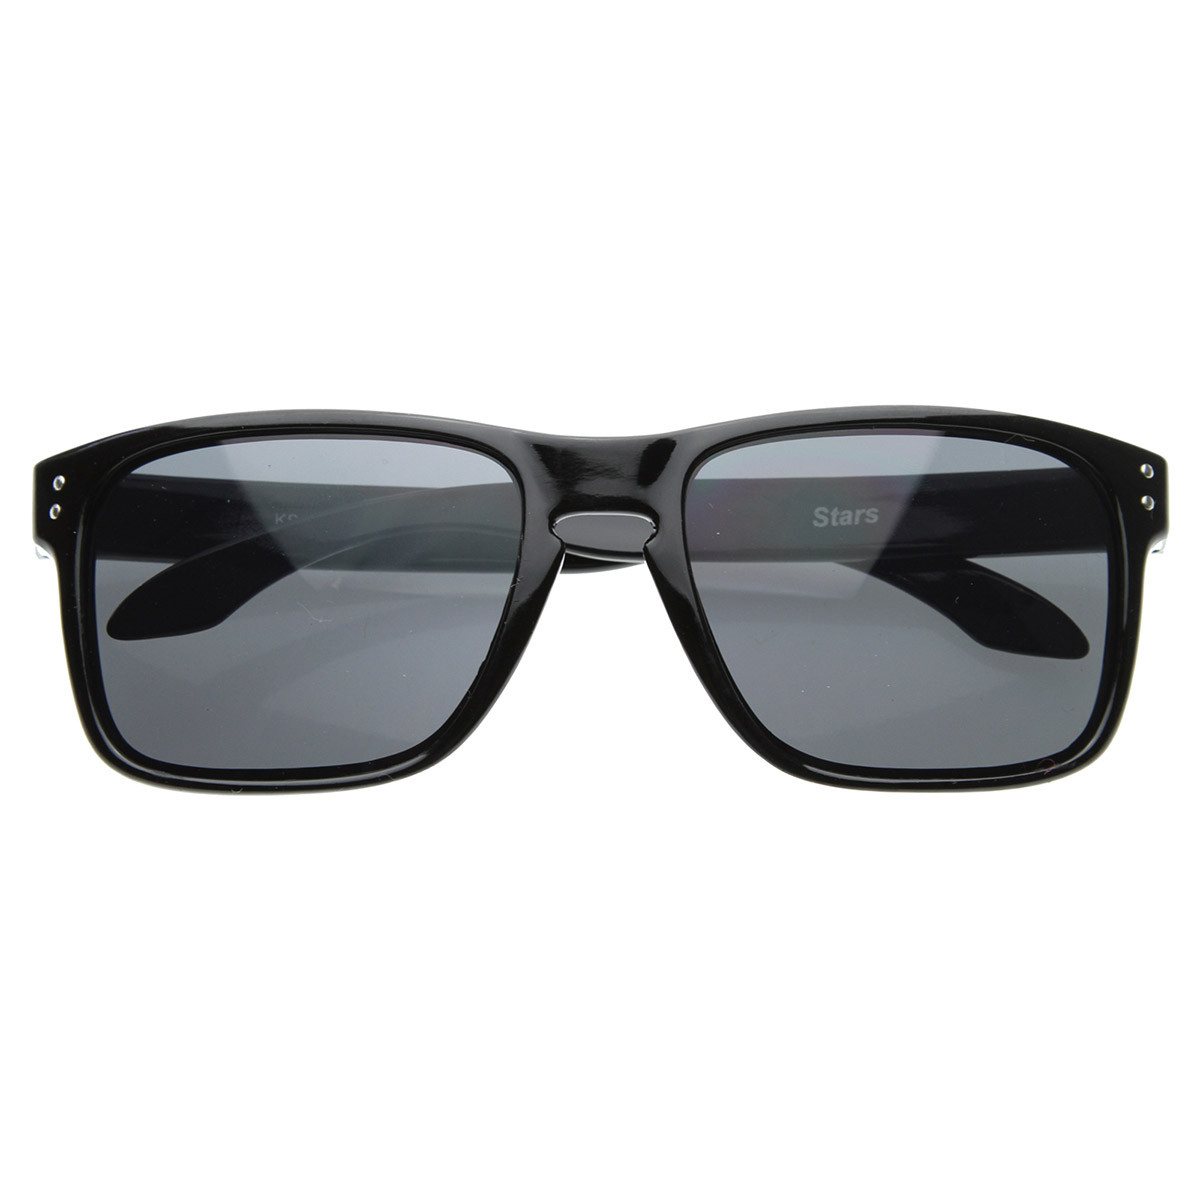 Designer Inspired Active Lifestyle Square Sunglasses With Keyhole Nose Bridge - White